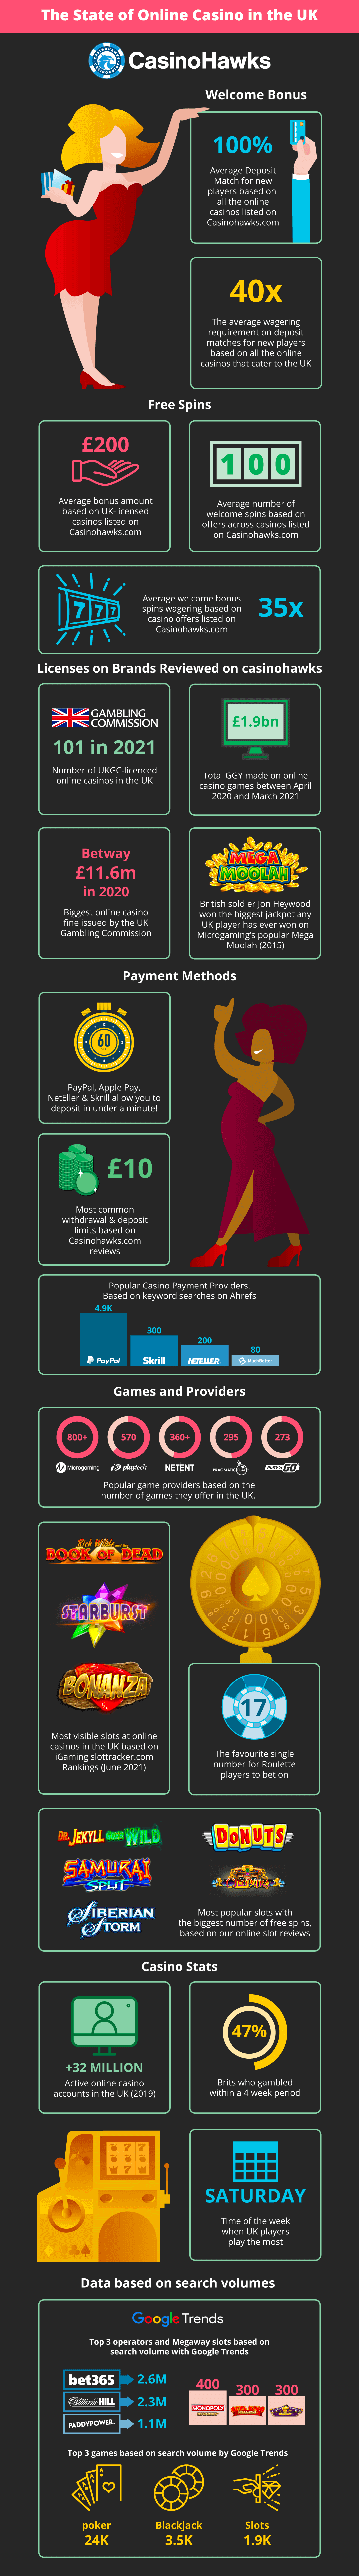 online casino UK infographic